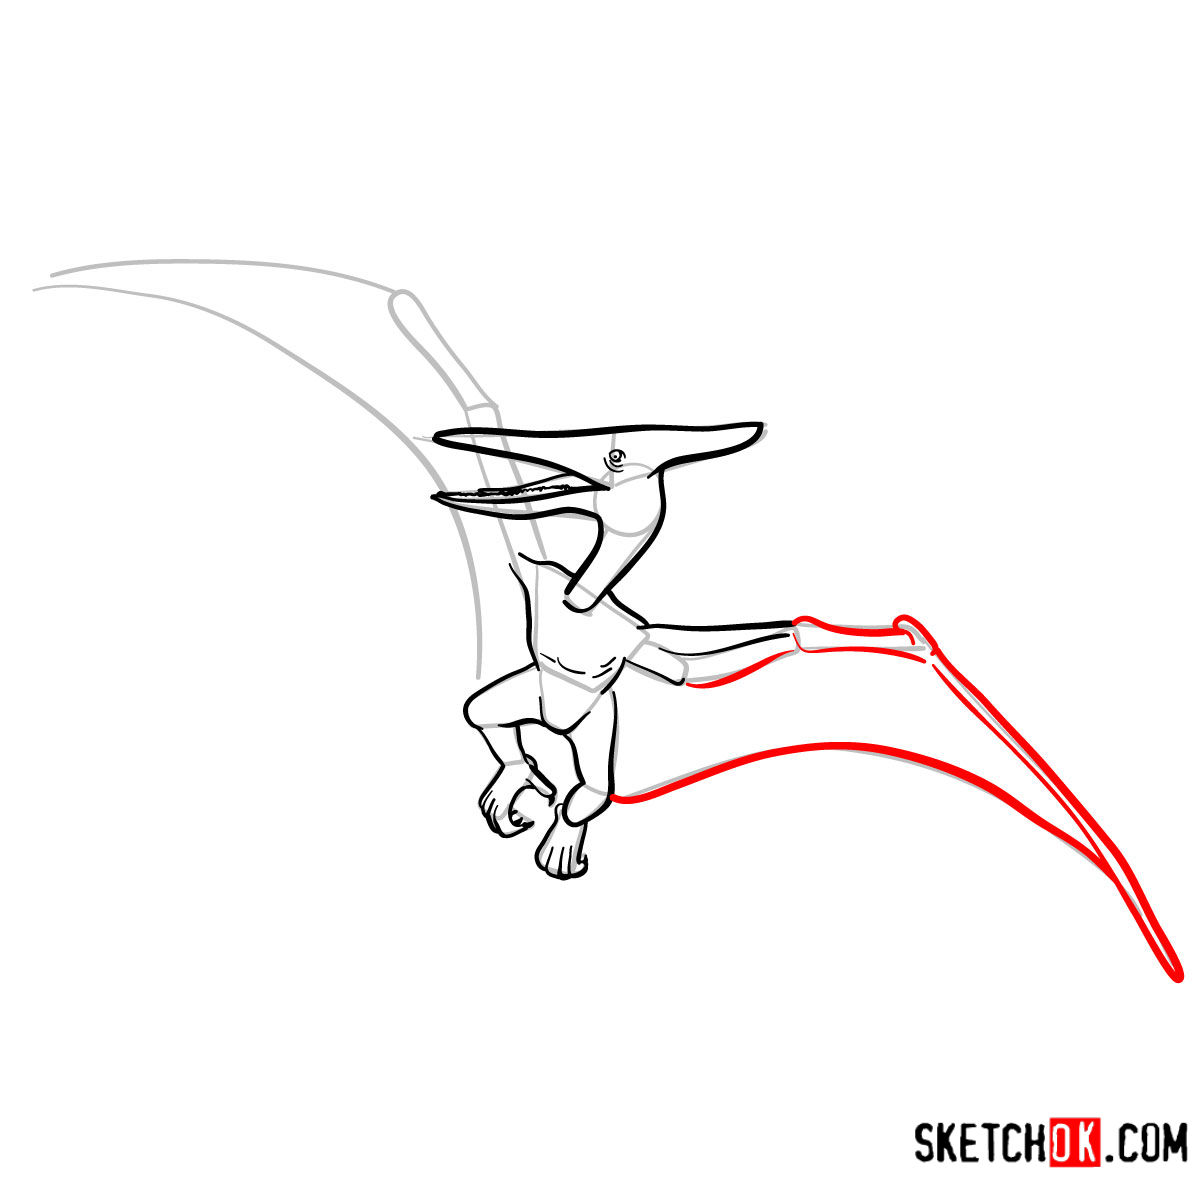 How to draw a Pterodactylus | Extinct Animals - step 09